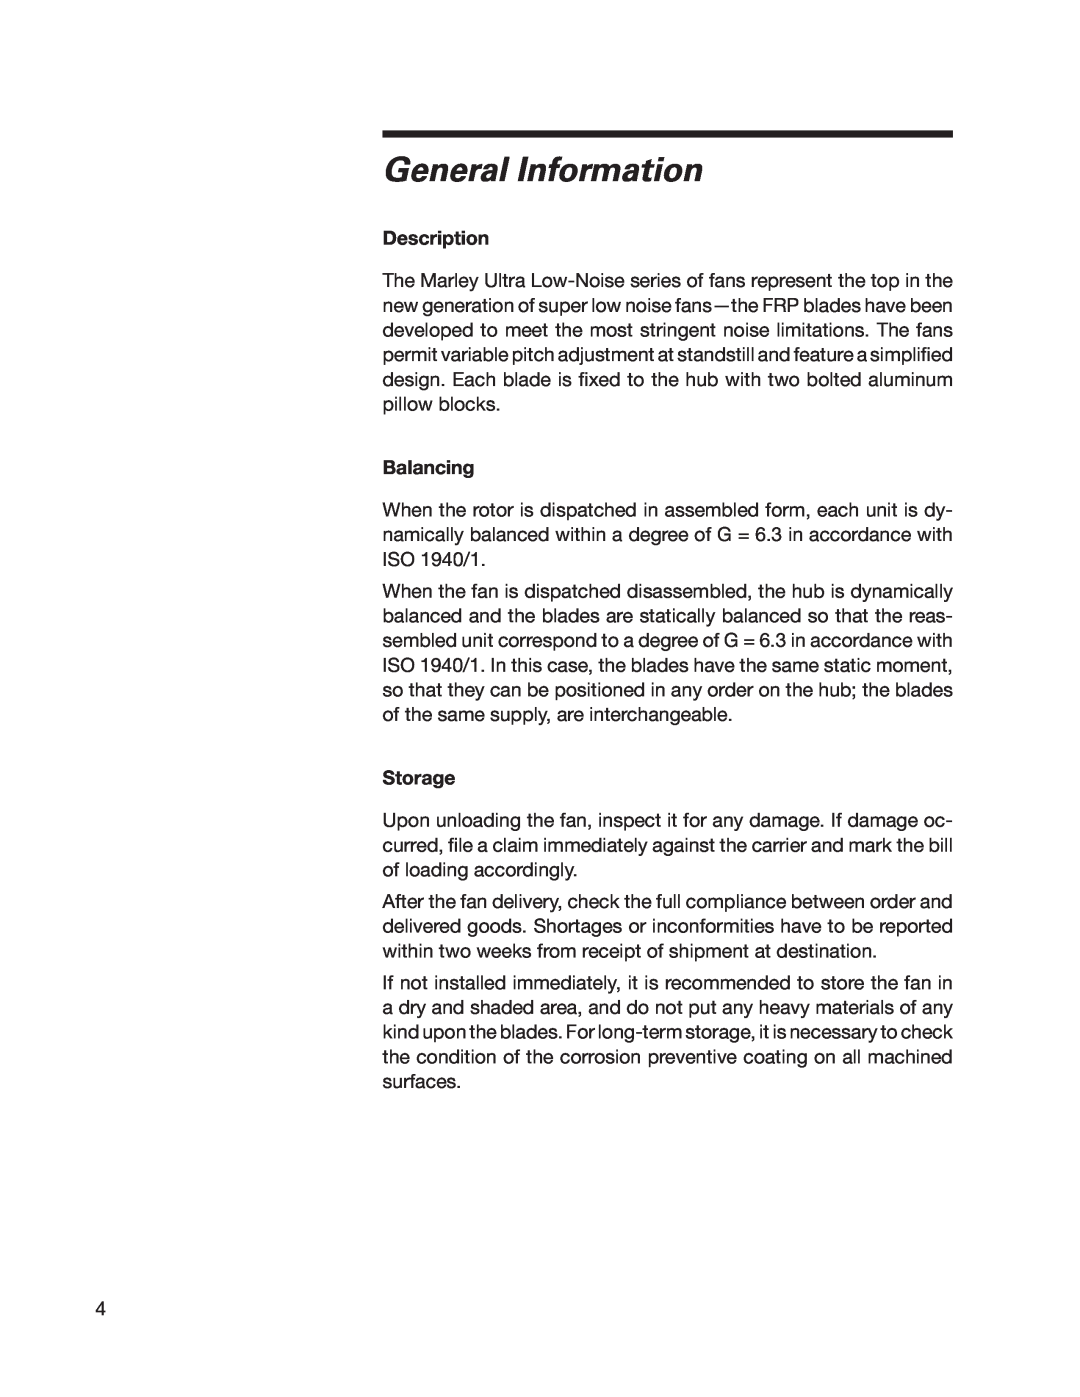 SPX Cooling Technologies 07-1126 user manual General Information, Description, Balancing, Storage 